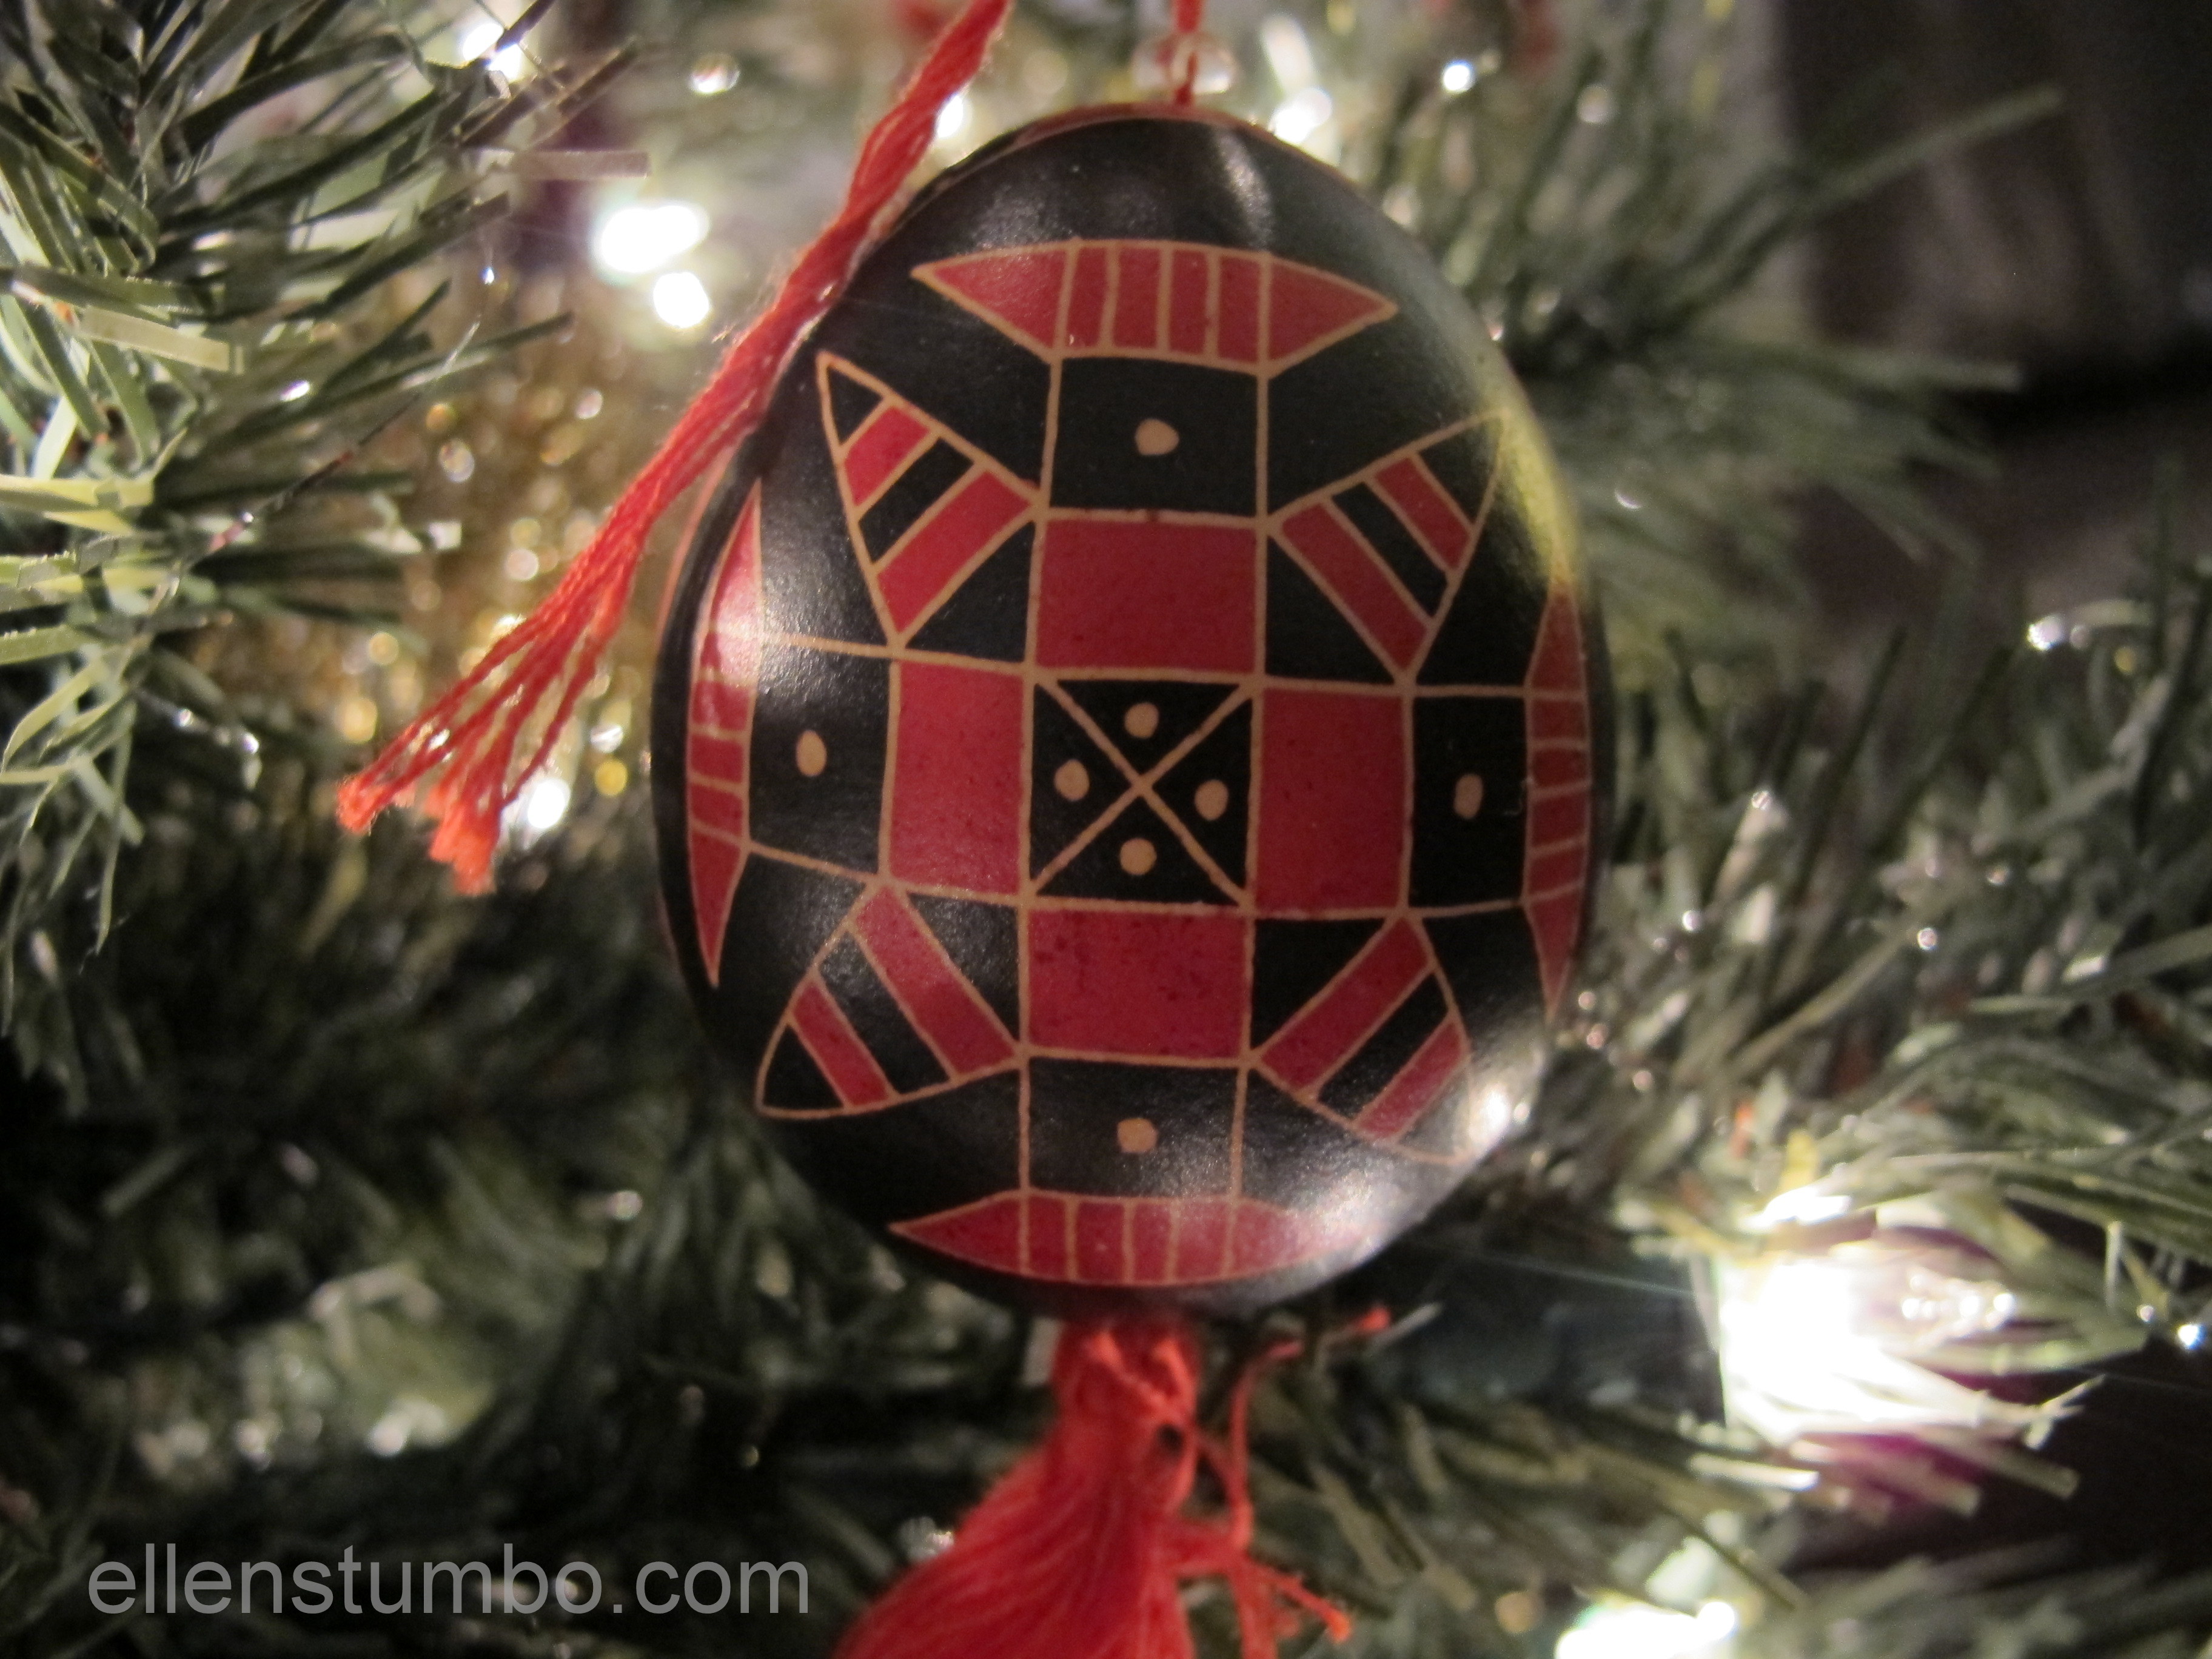 My Christmas ornaments tell a story - Ellen Stumbo